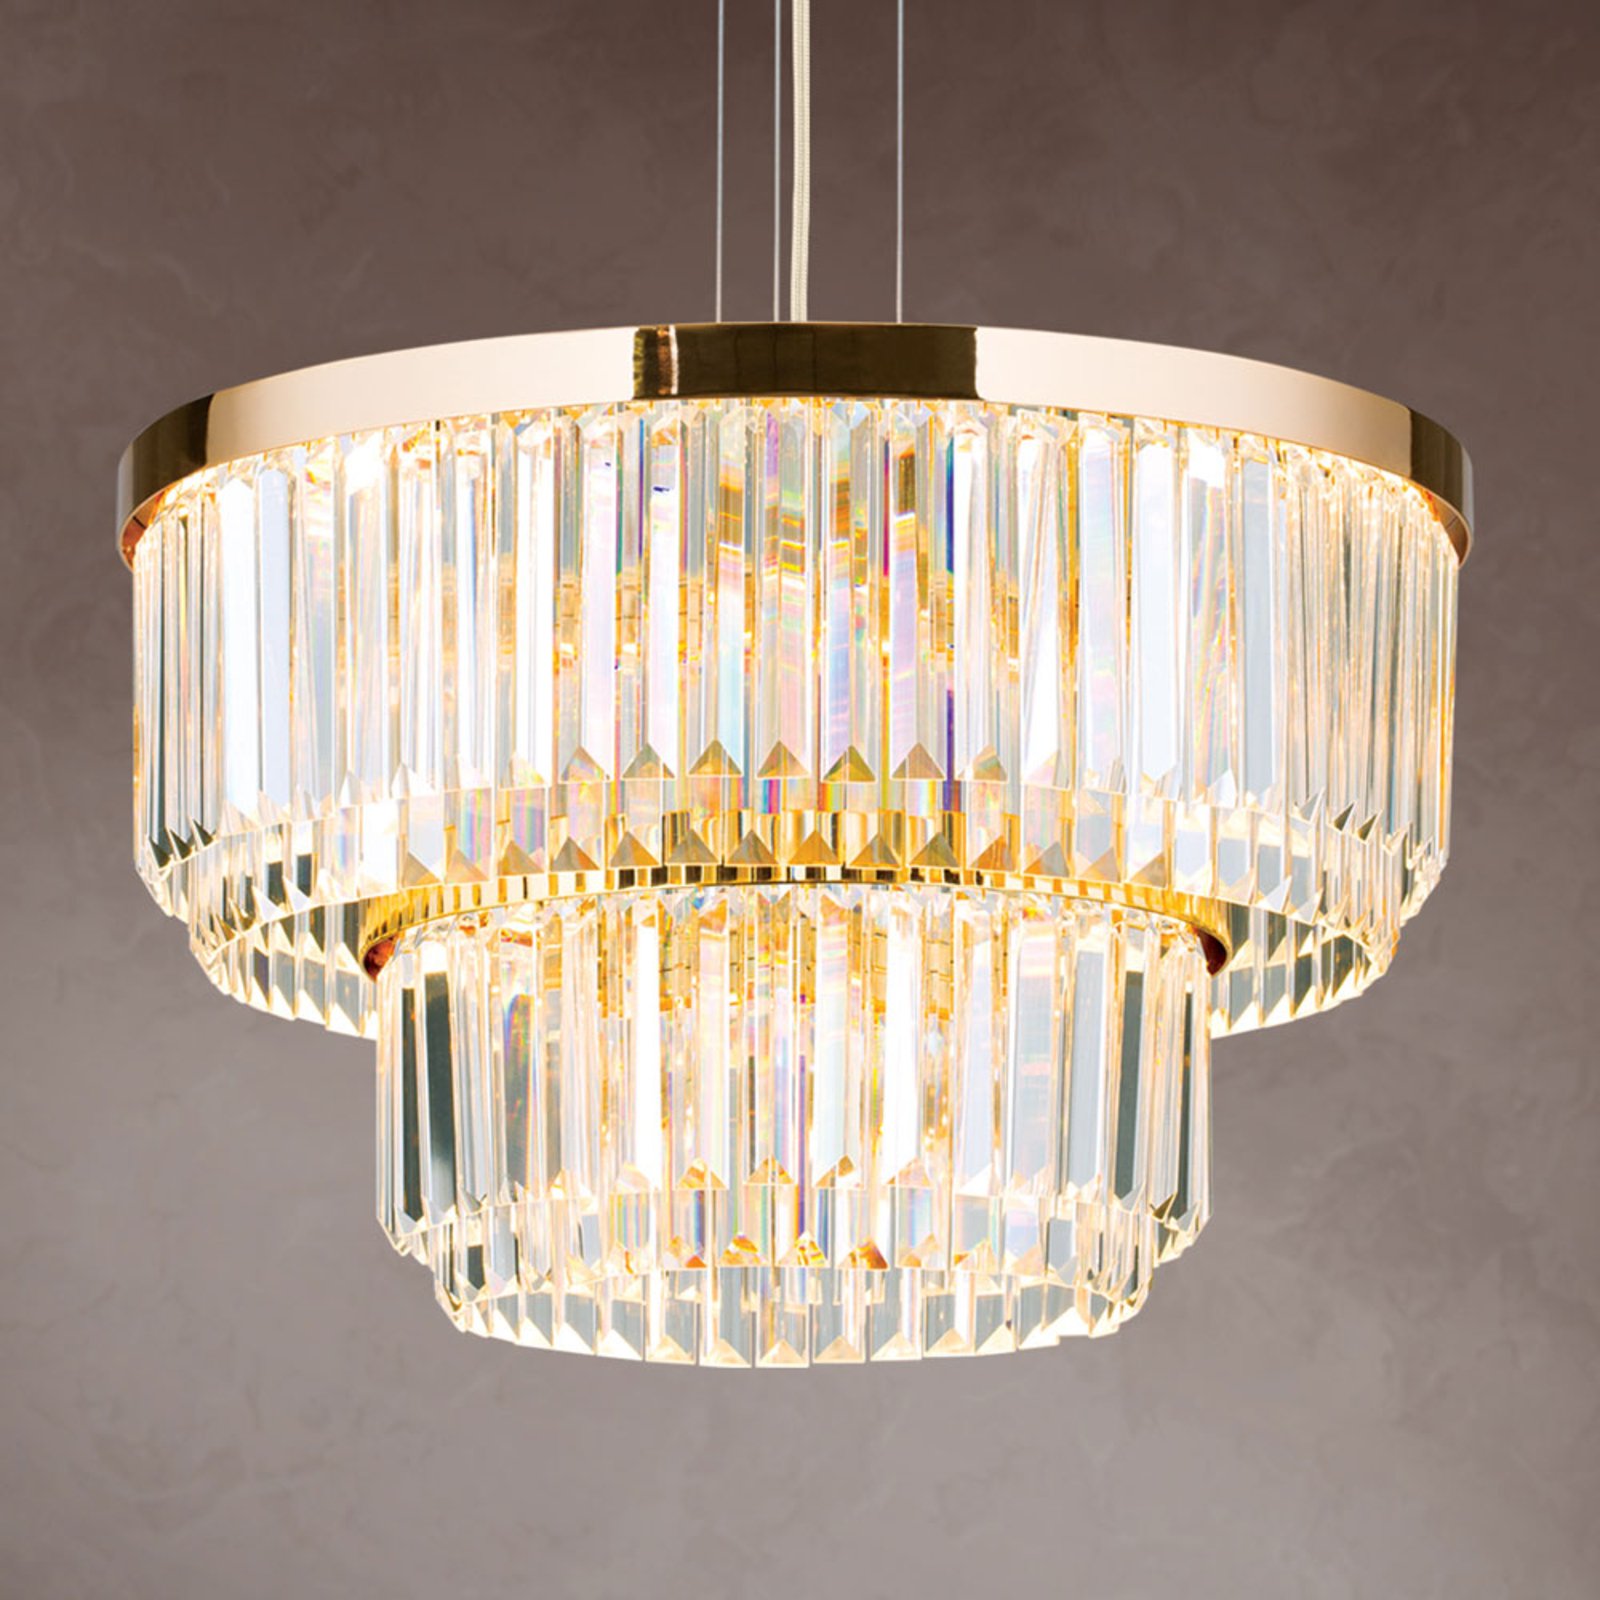 LED-pendellampa Prism, rund, Ø 55 cm, guld